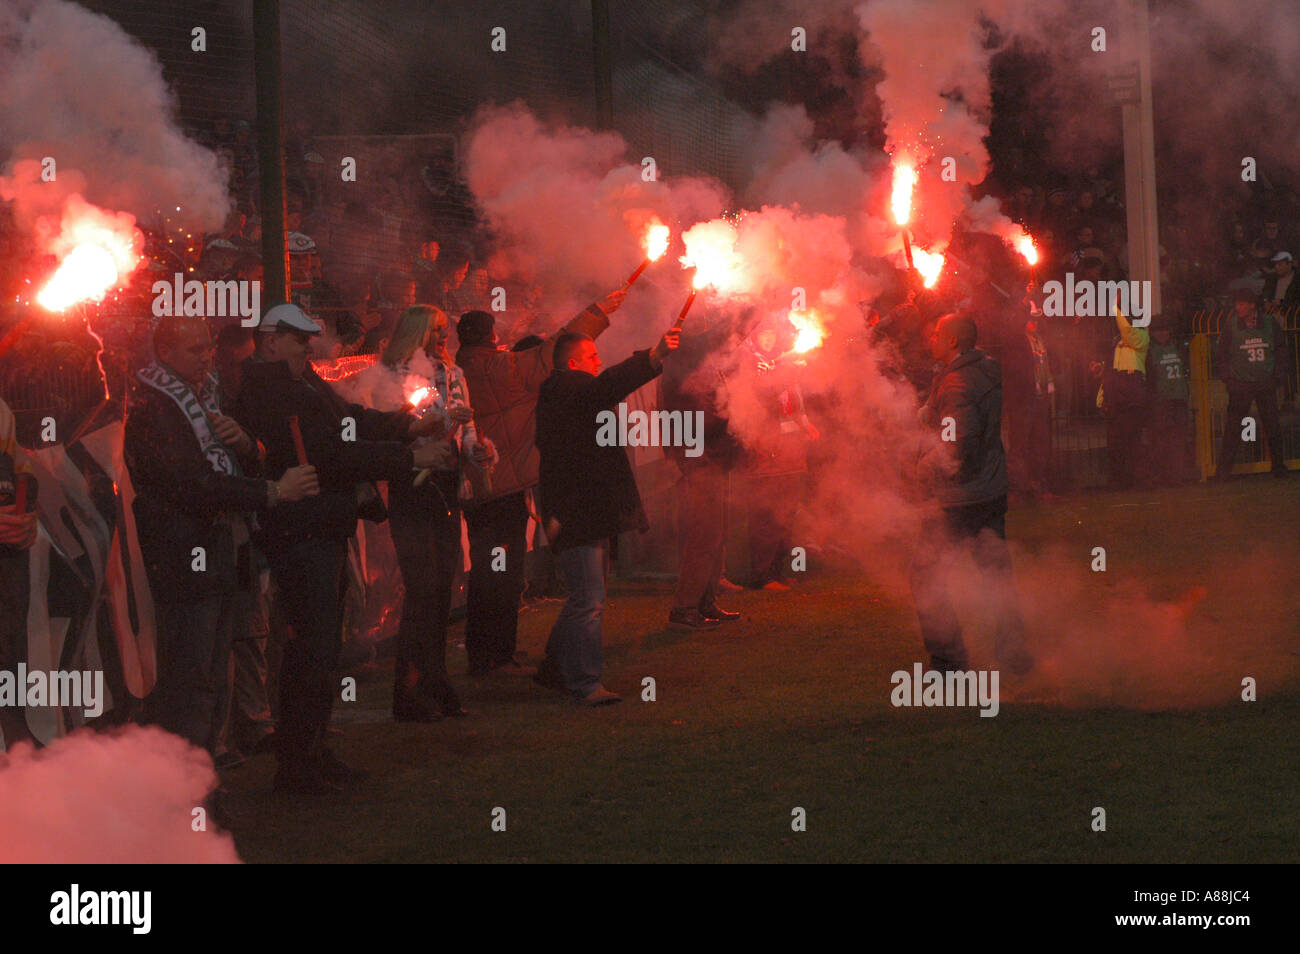 Football Fans Burning Fire On Soccer Stadium Stock Photo Alamy